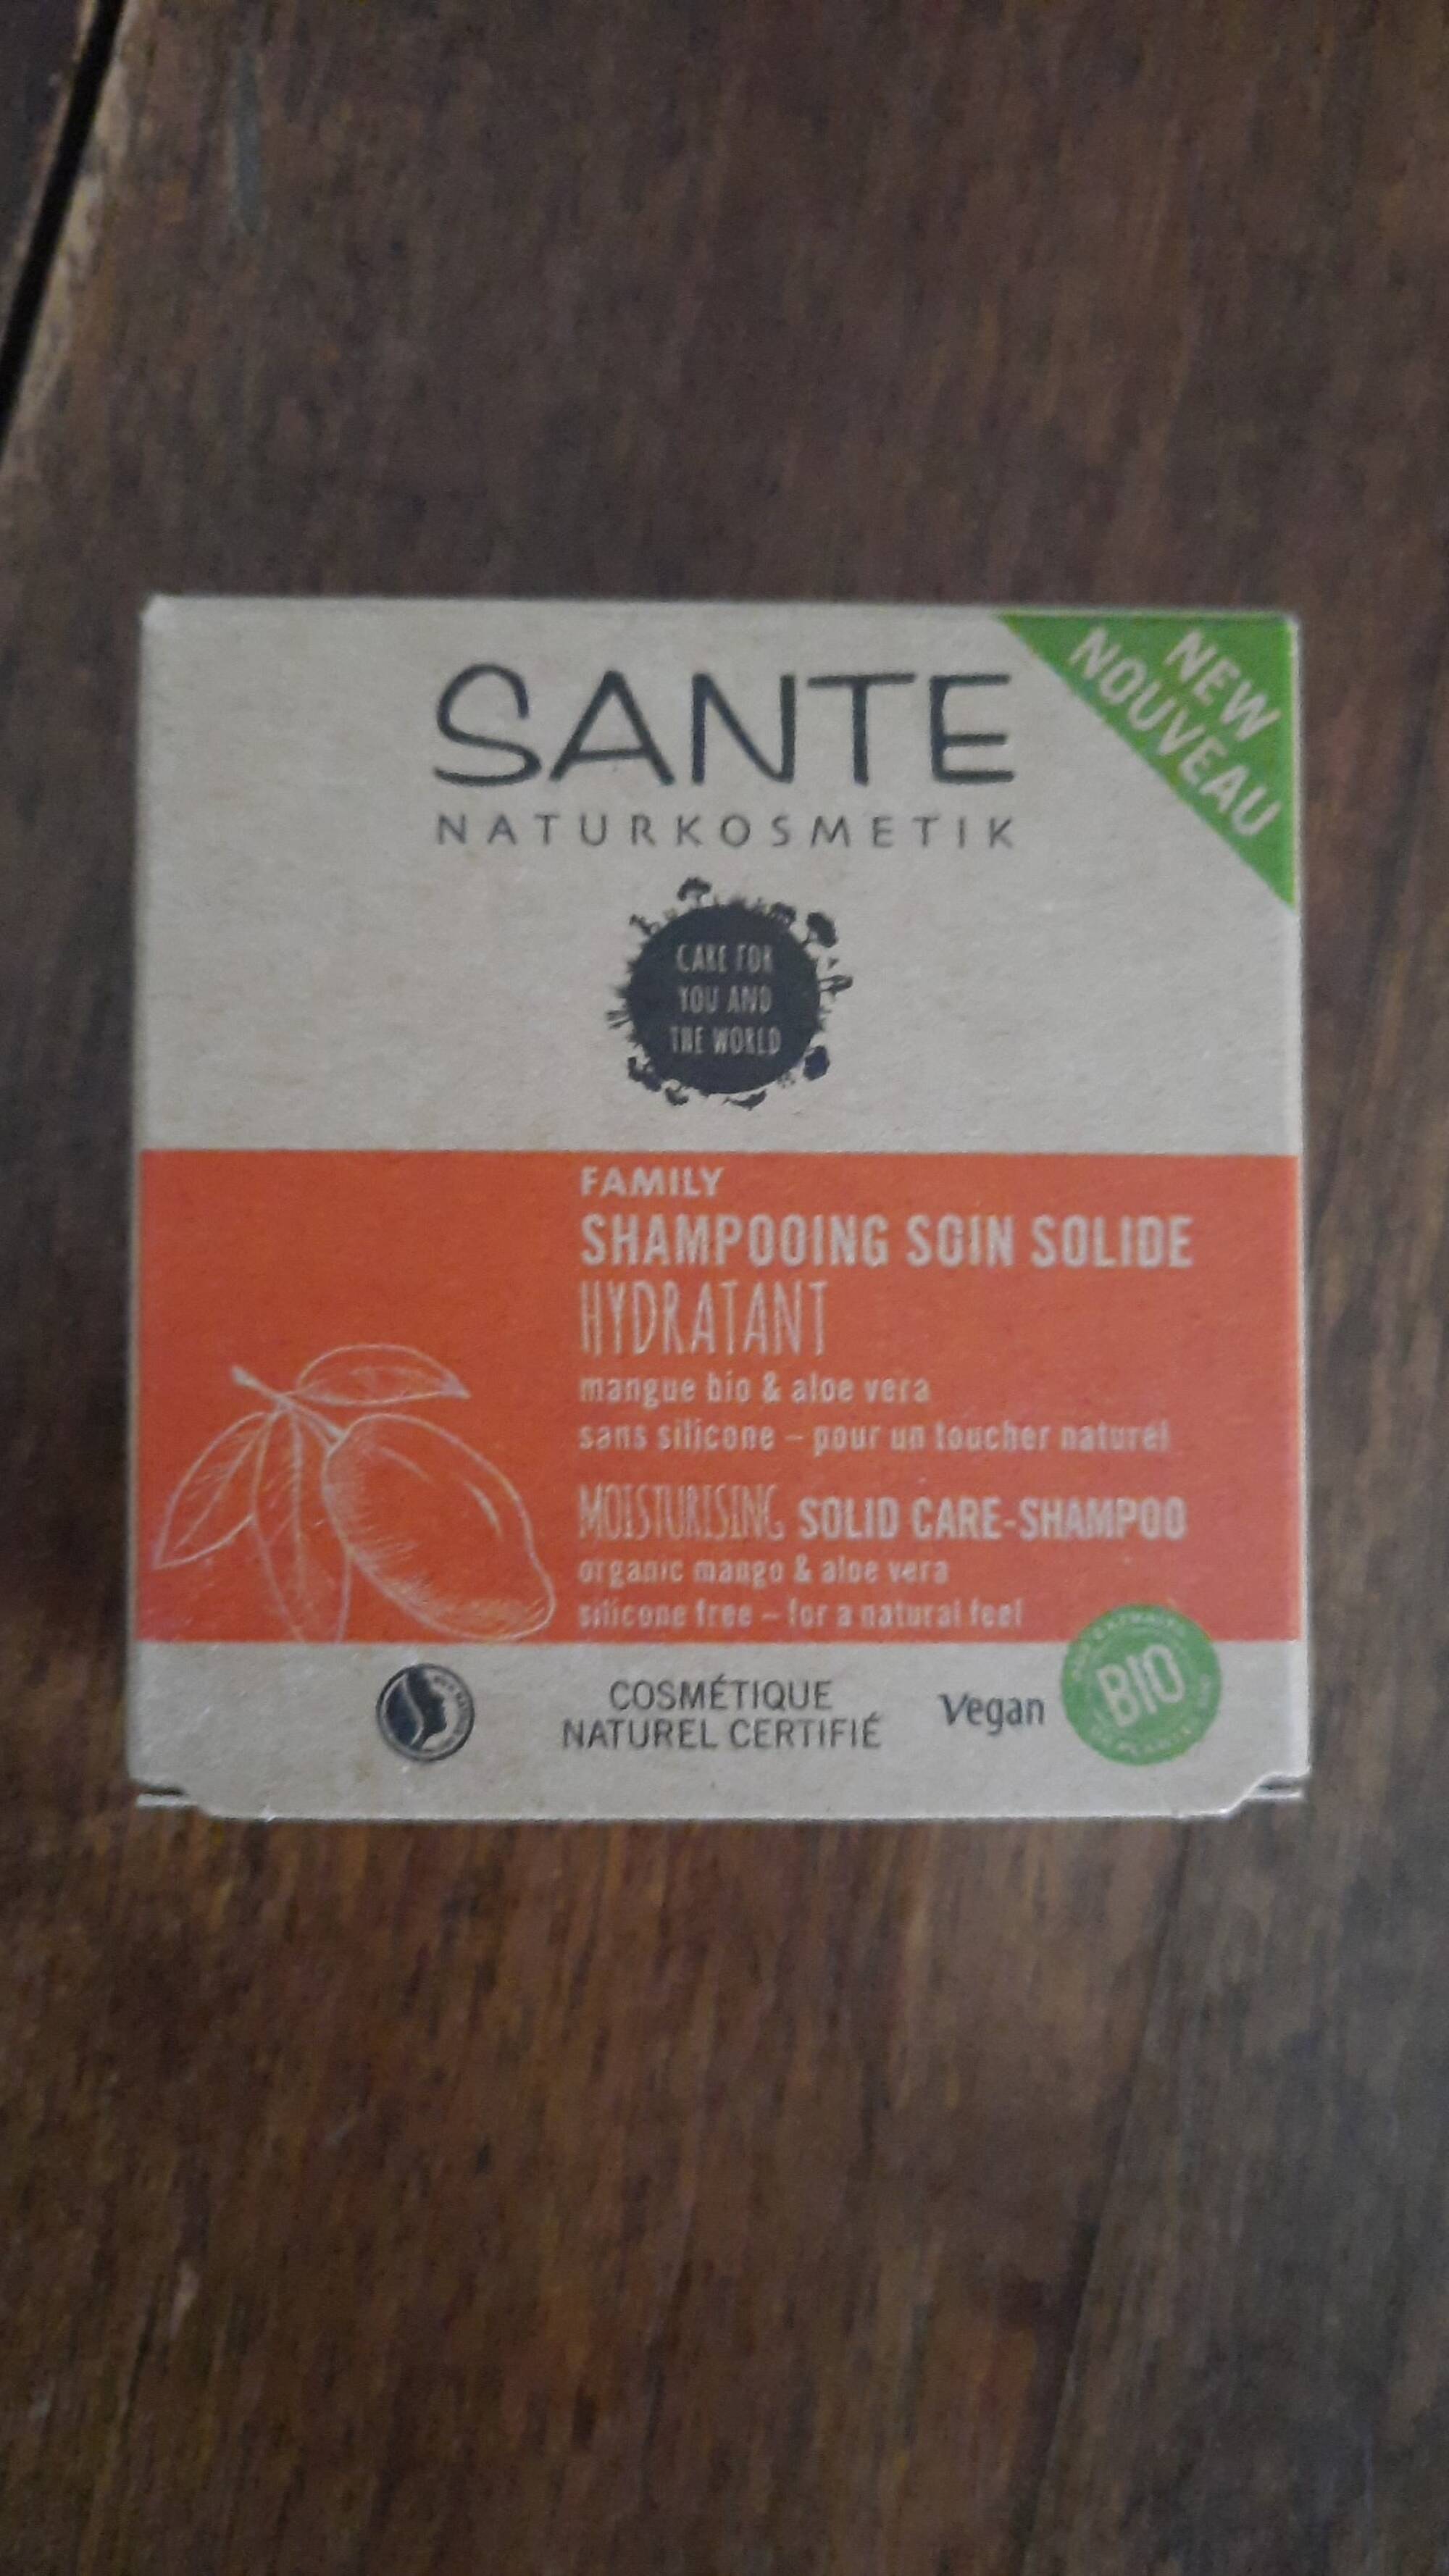 SANTE NATURKOSMETIK - Shampooing soin solide hydratant